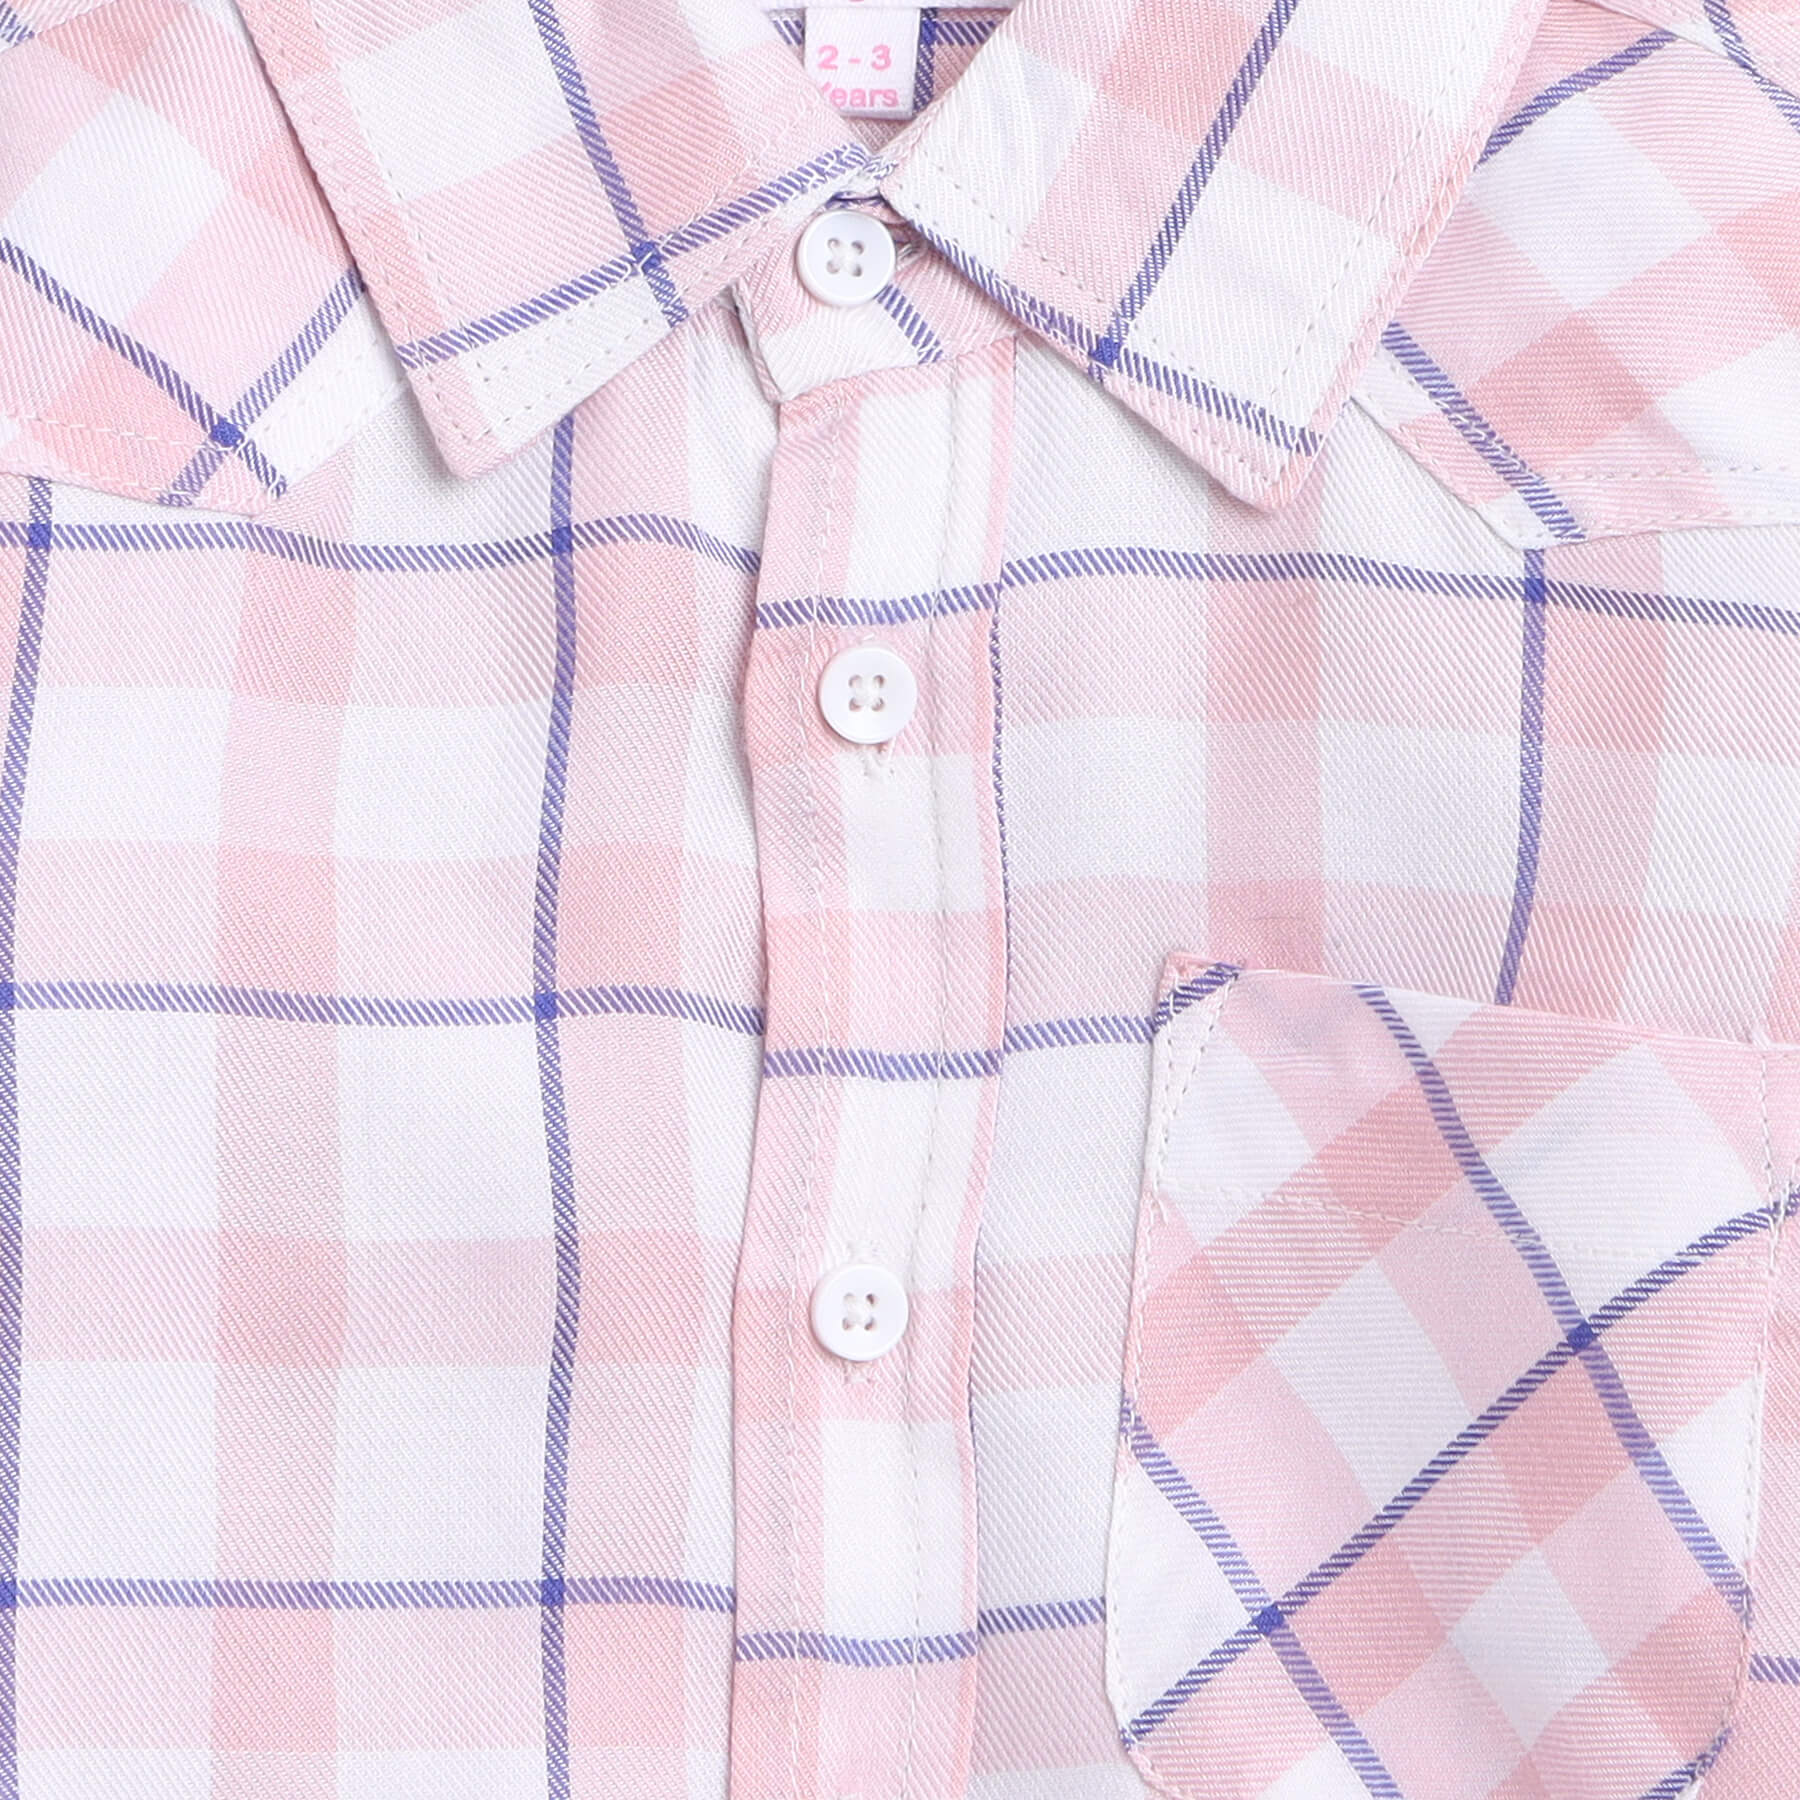 Taffykids checks full sleeves shirt - Pink/White